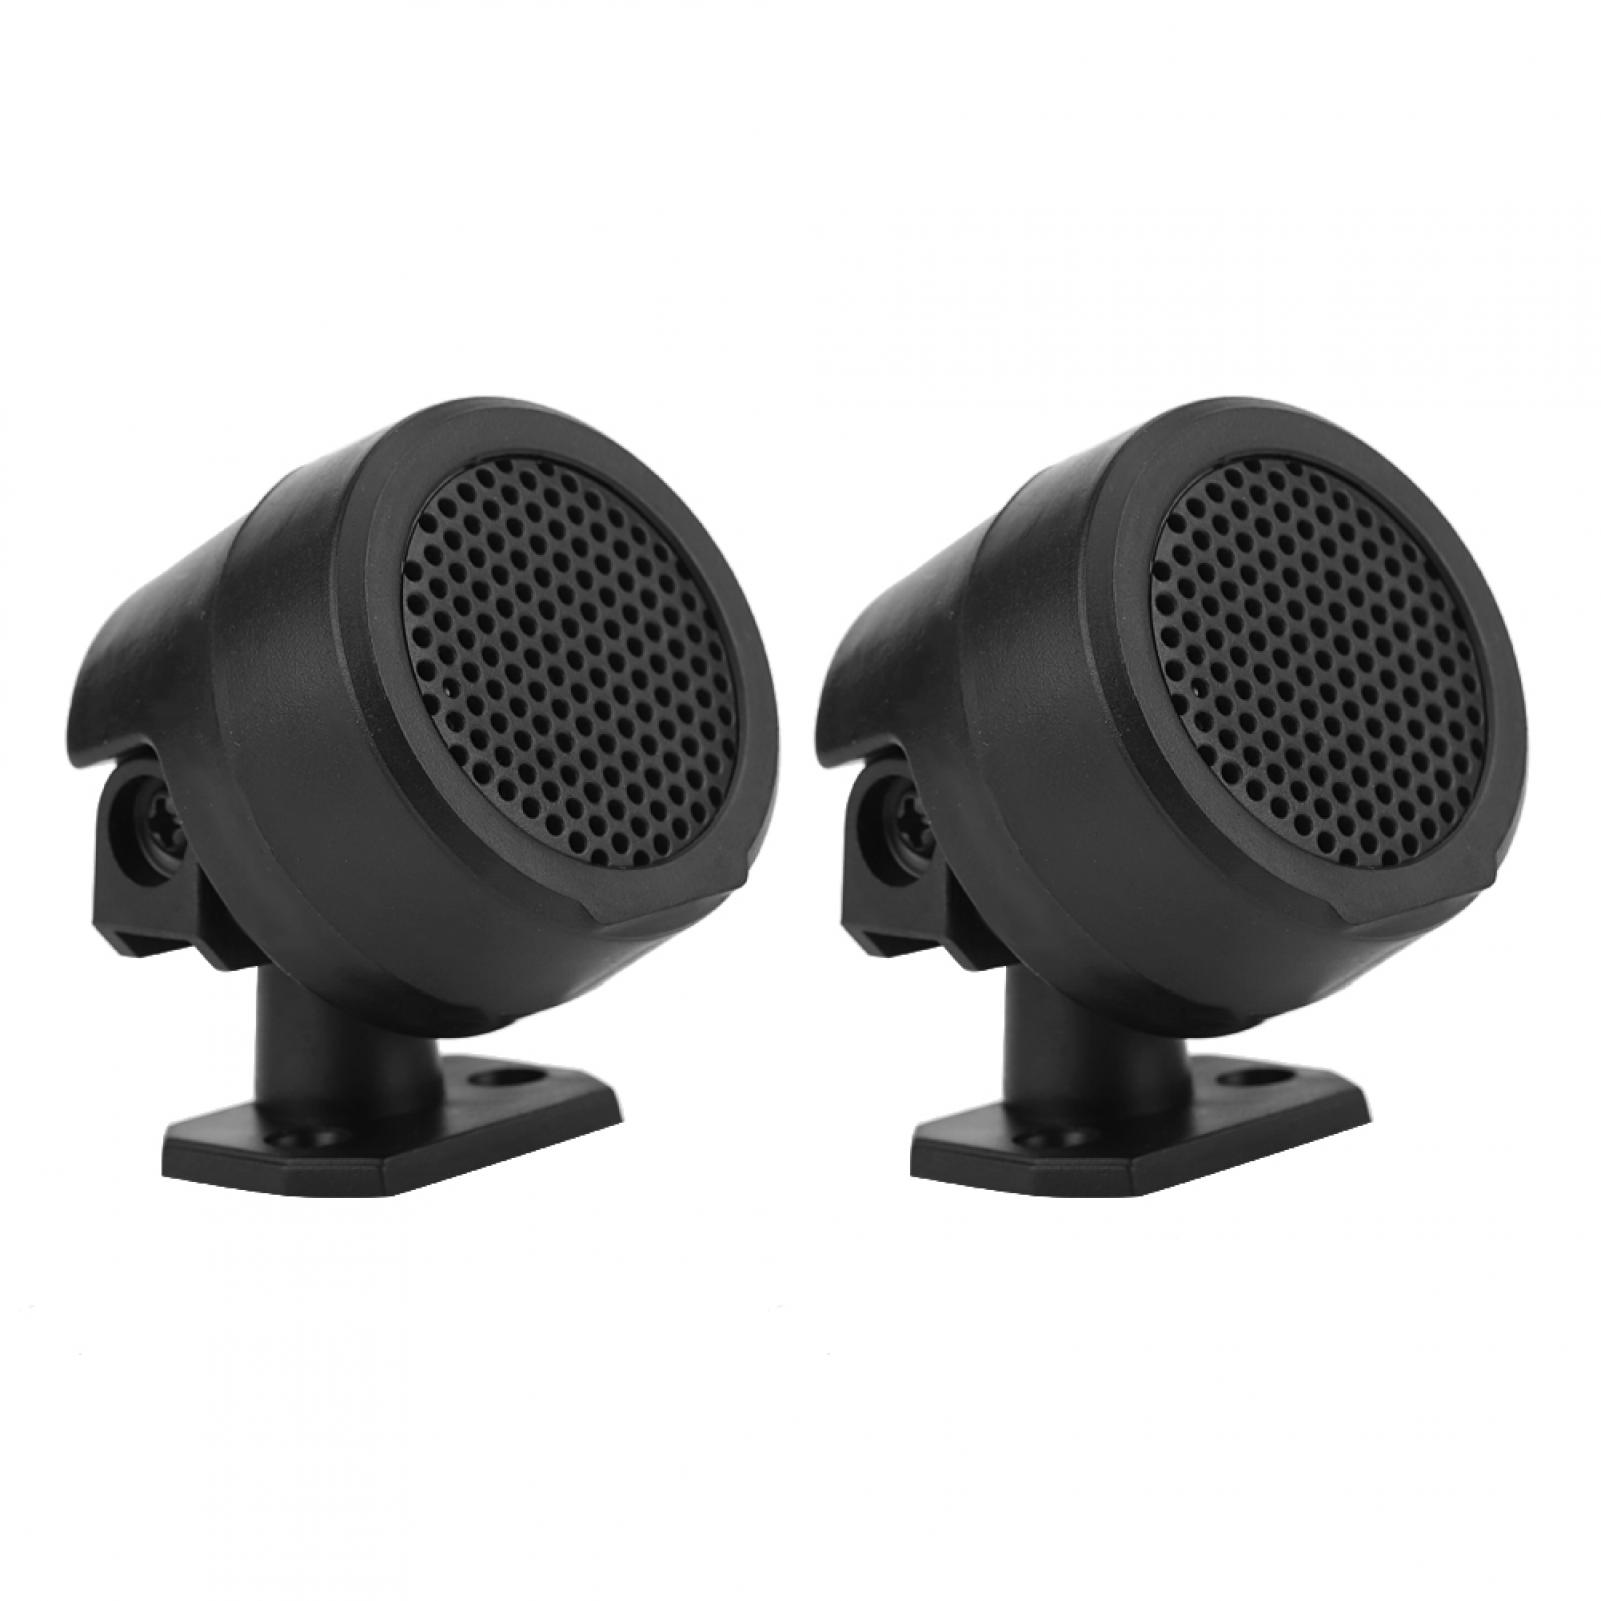 LAFGUR Audio Speaker, Car Speaker, 2Pcs For Car For Car Component Stereo Car Tweeter Car Audio System - image 4 of 8